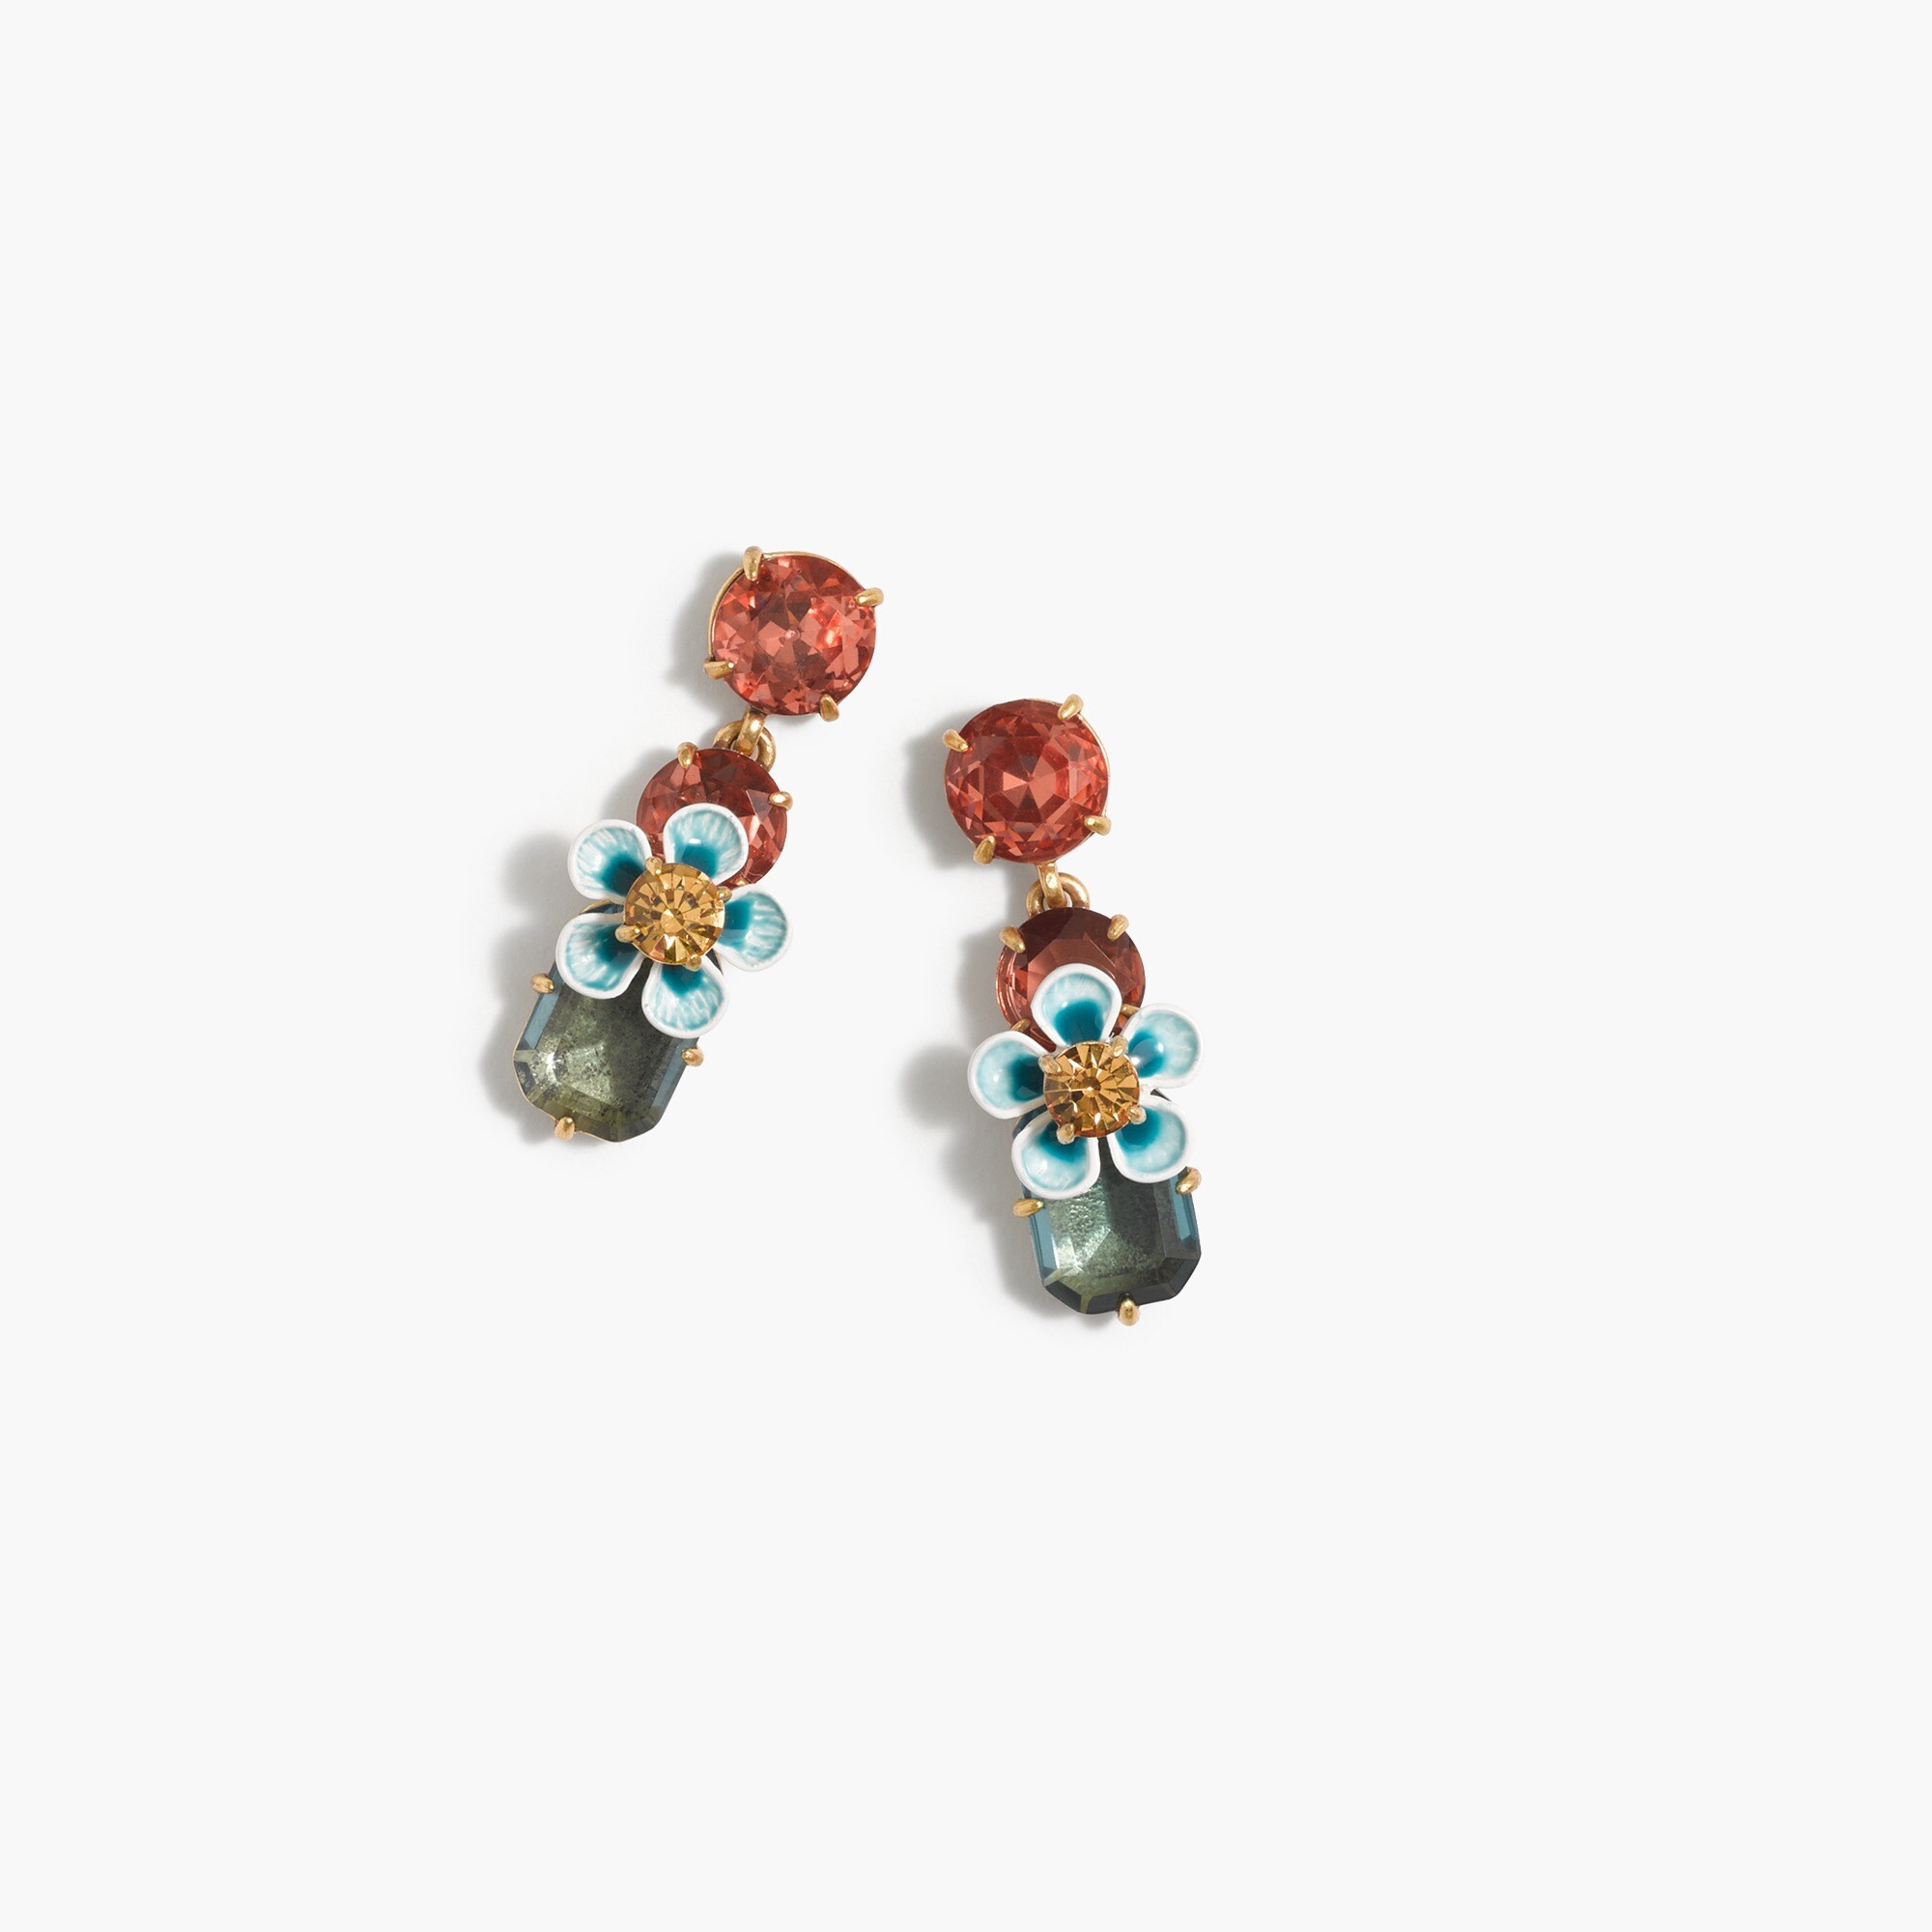 Stacked floral crystal earrings : Women earrings | J.Crew